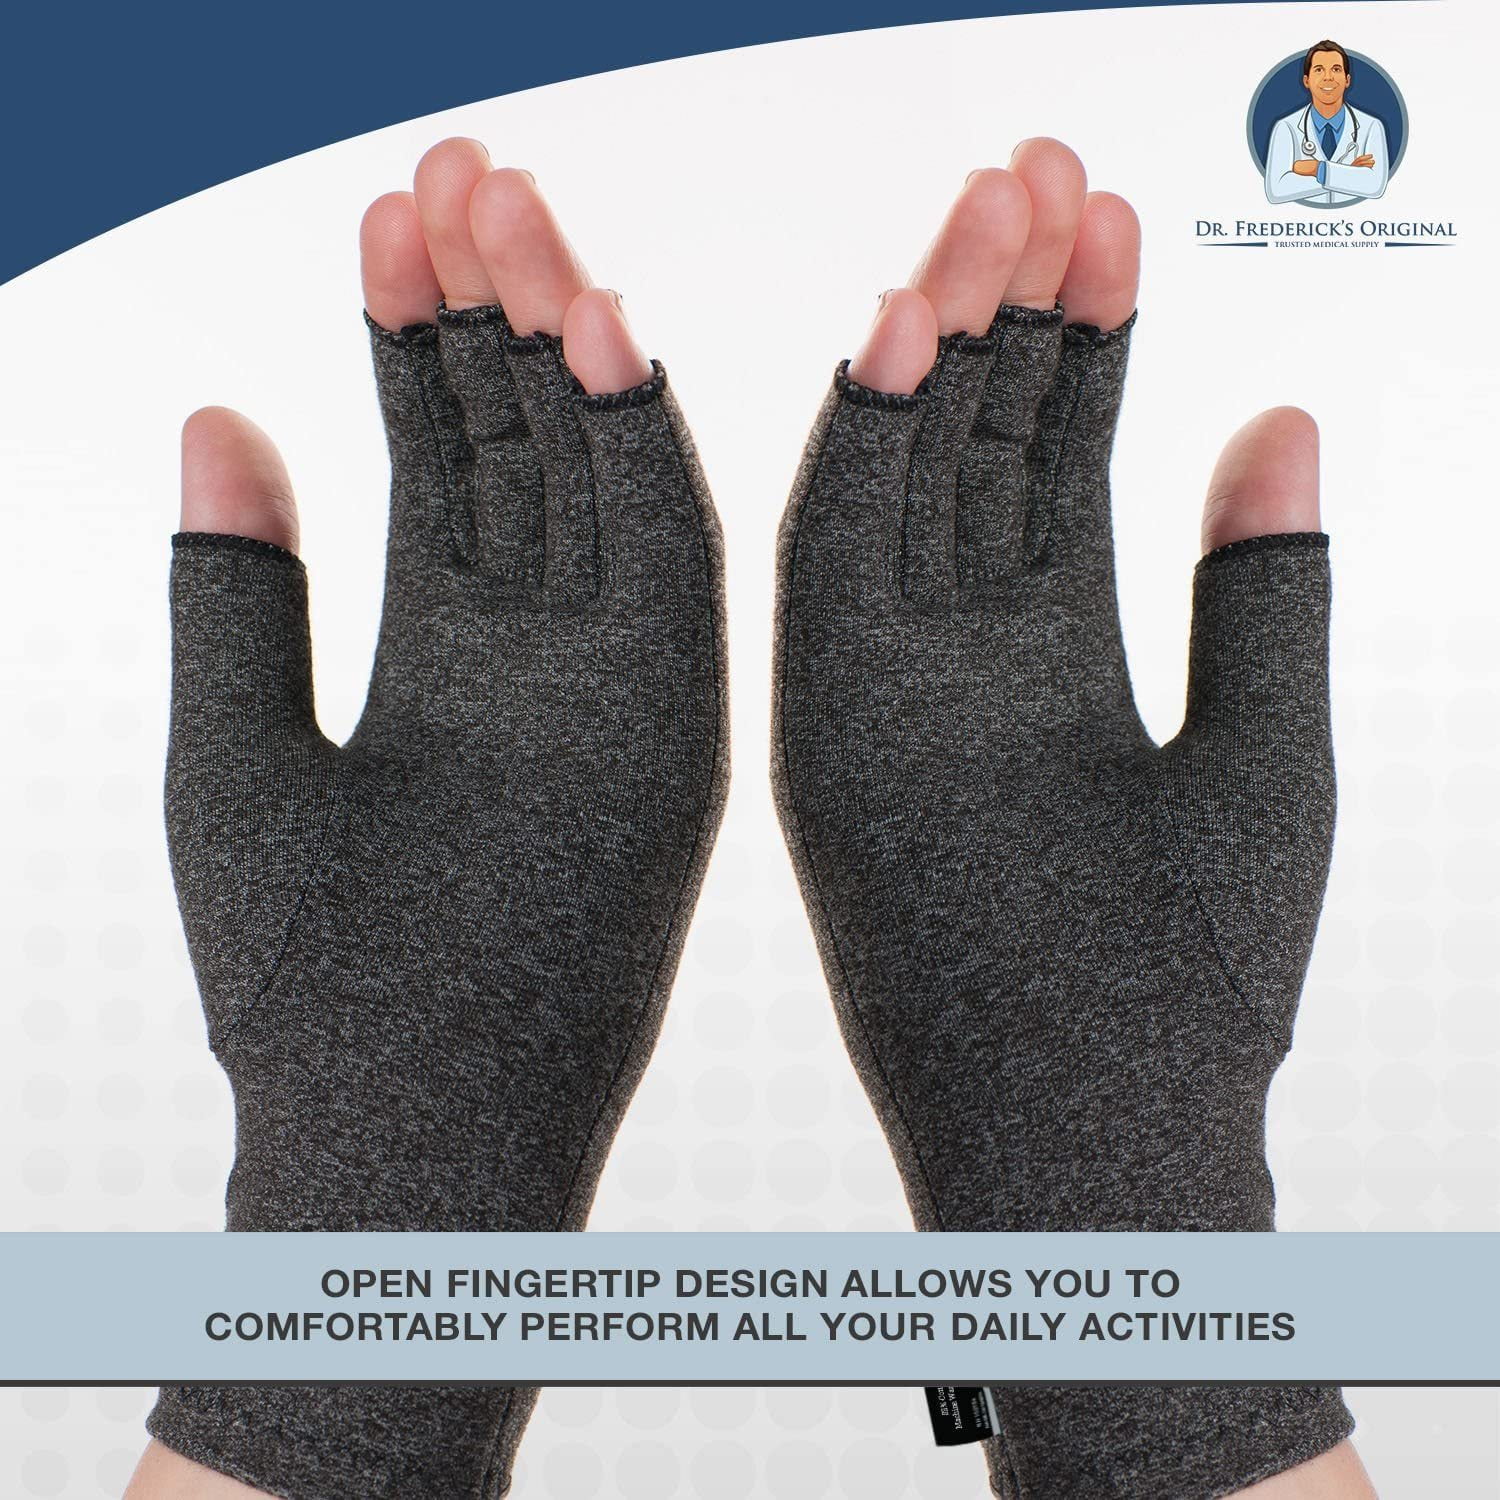 Dr. Frederick's Original Grippy Arthritis Gloves for Women & Men -  Compression for Arthritis Pain Relief - Large